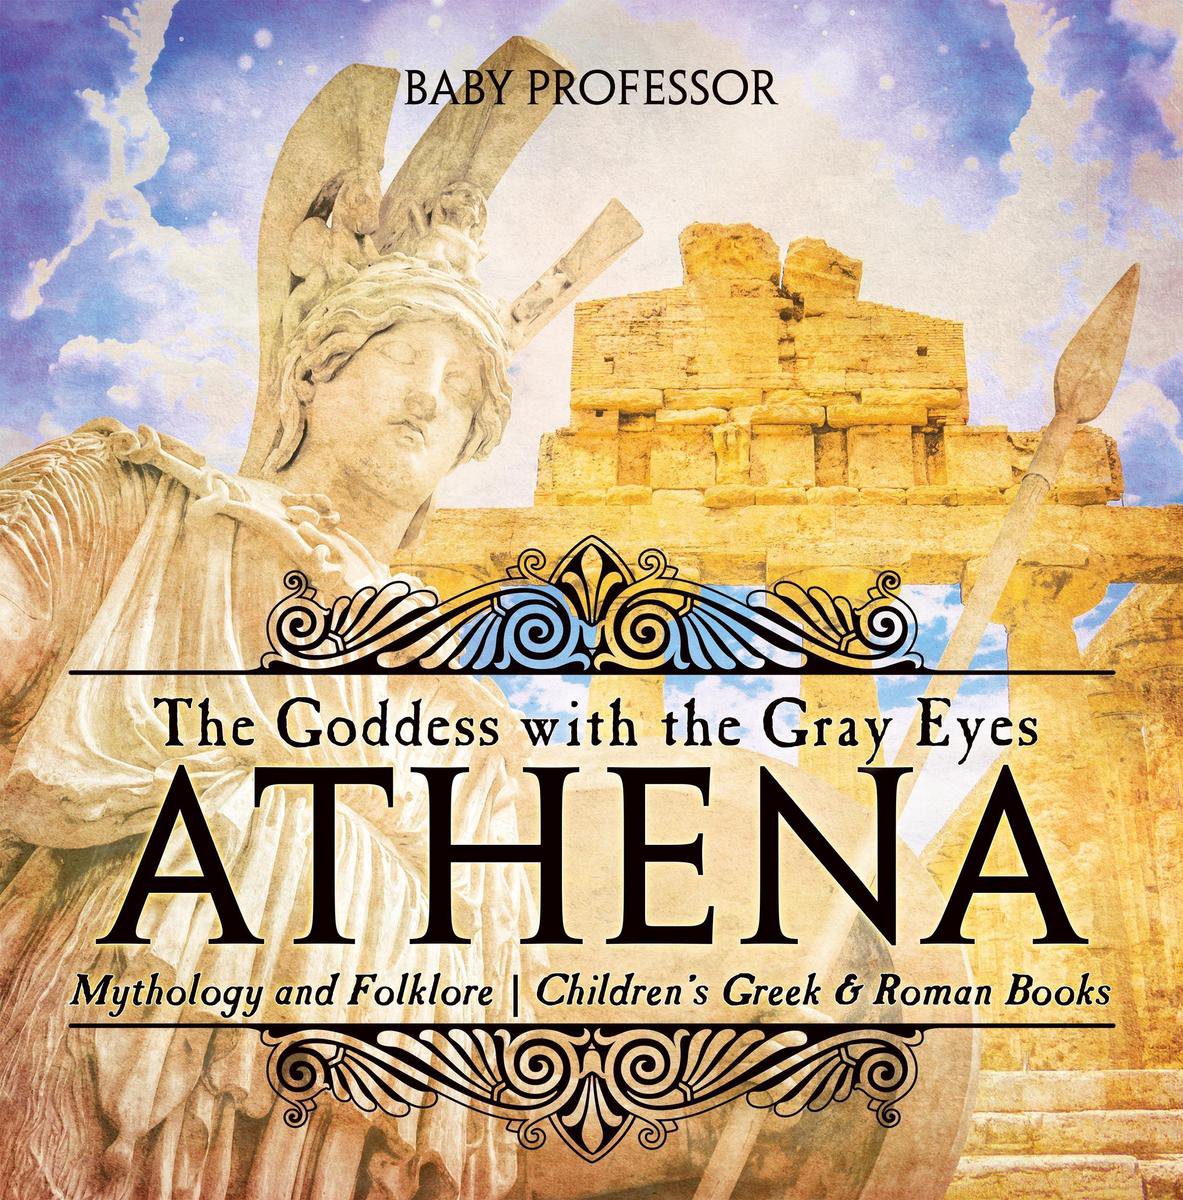 Eye of athena